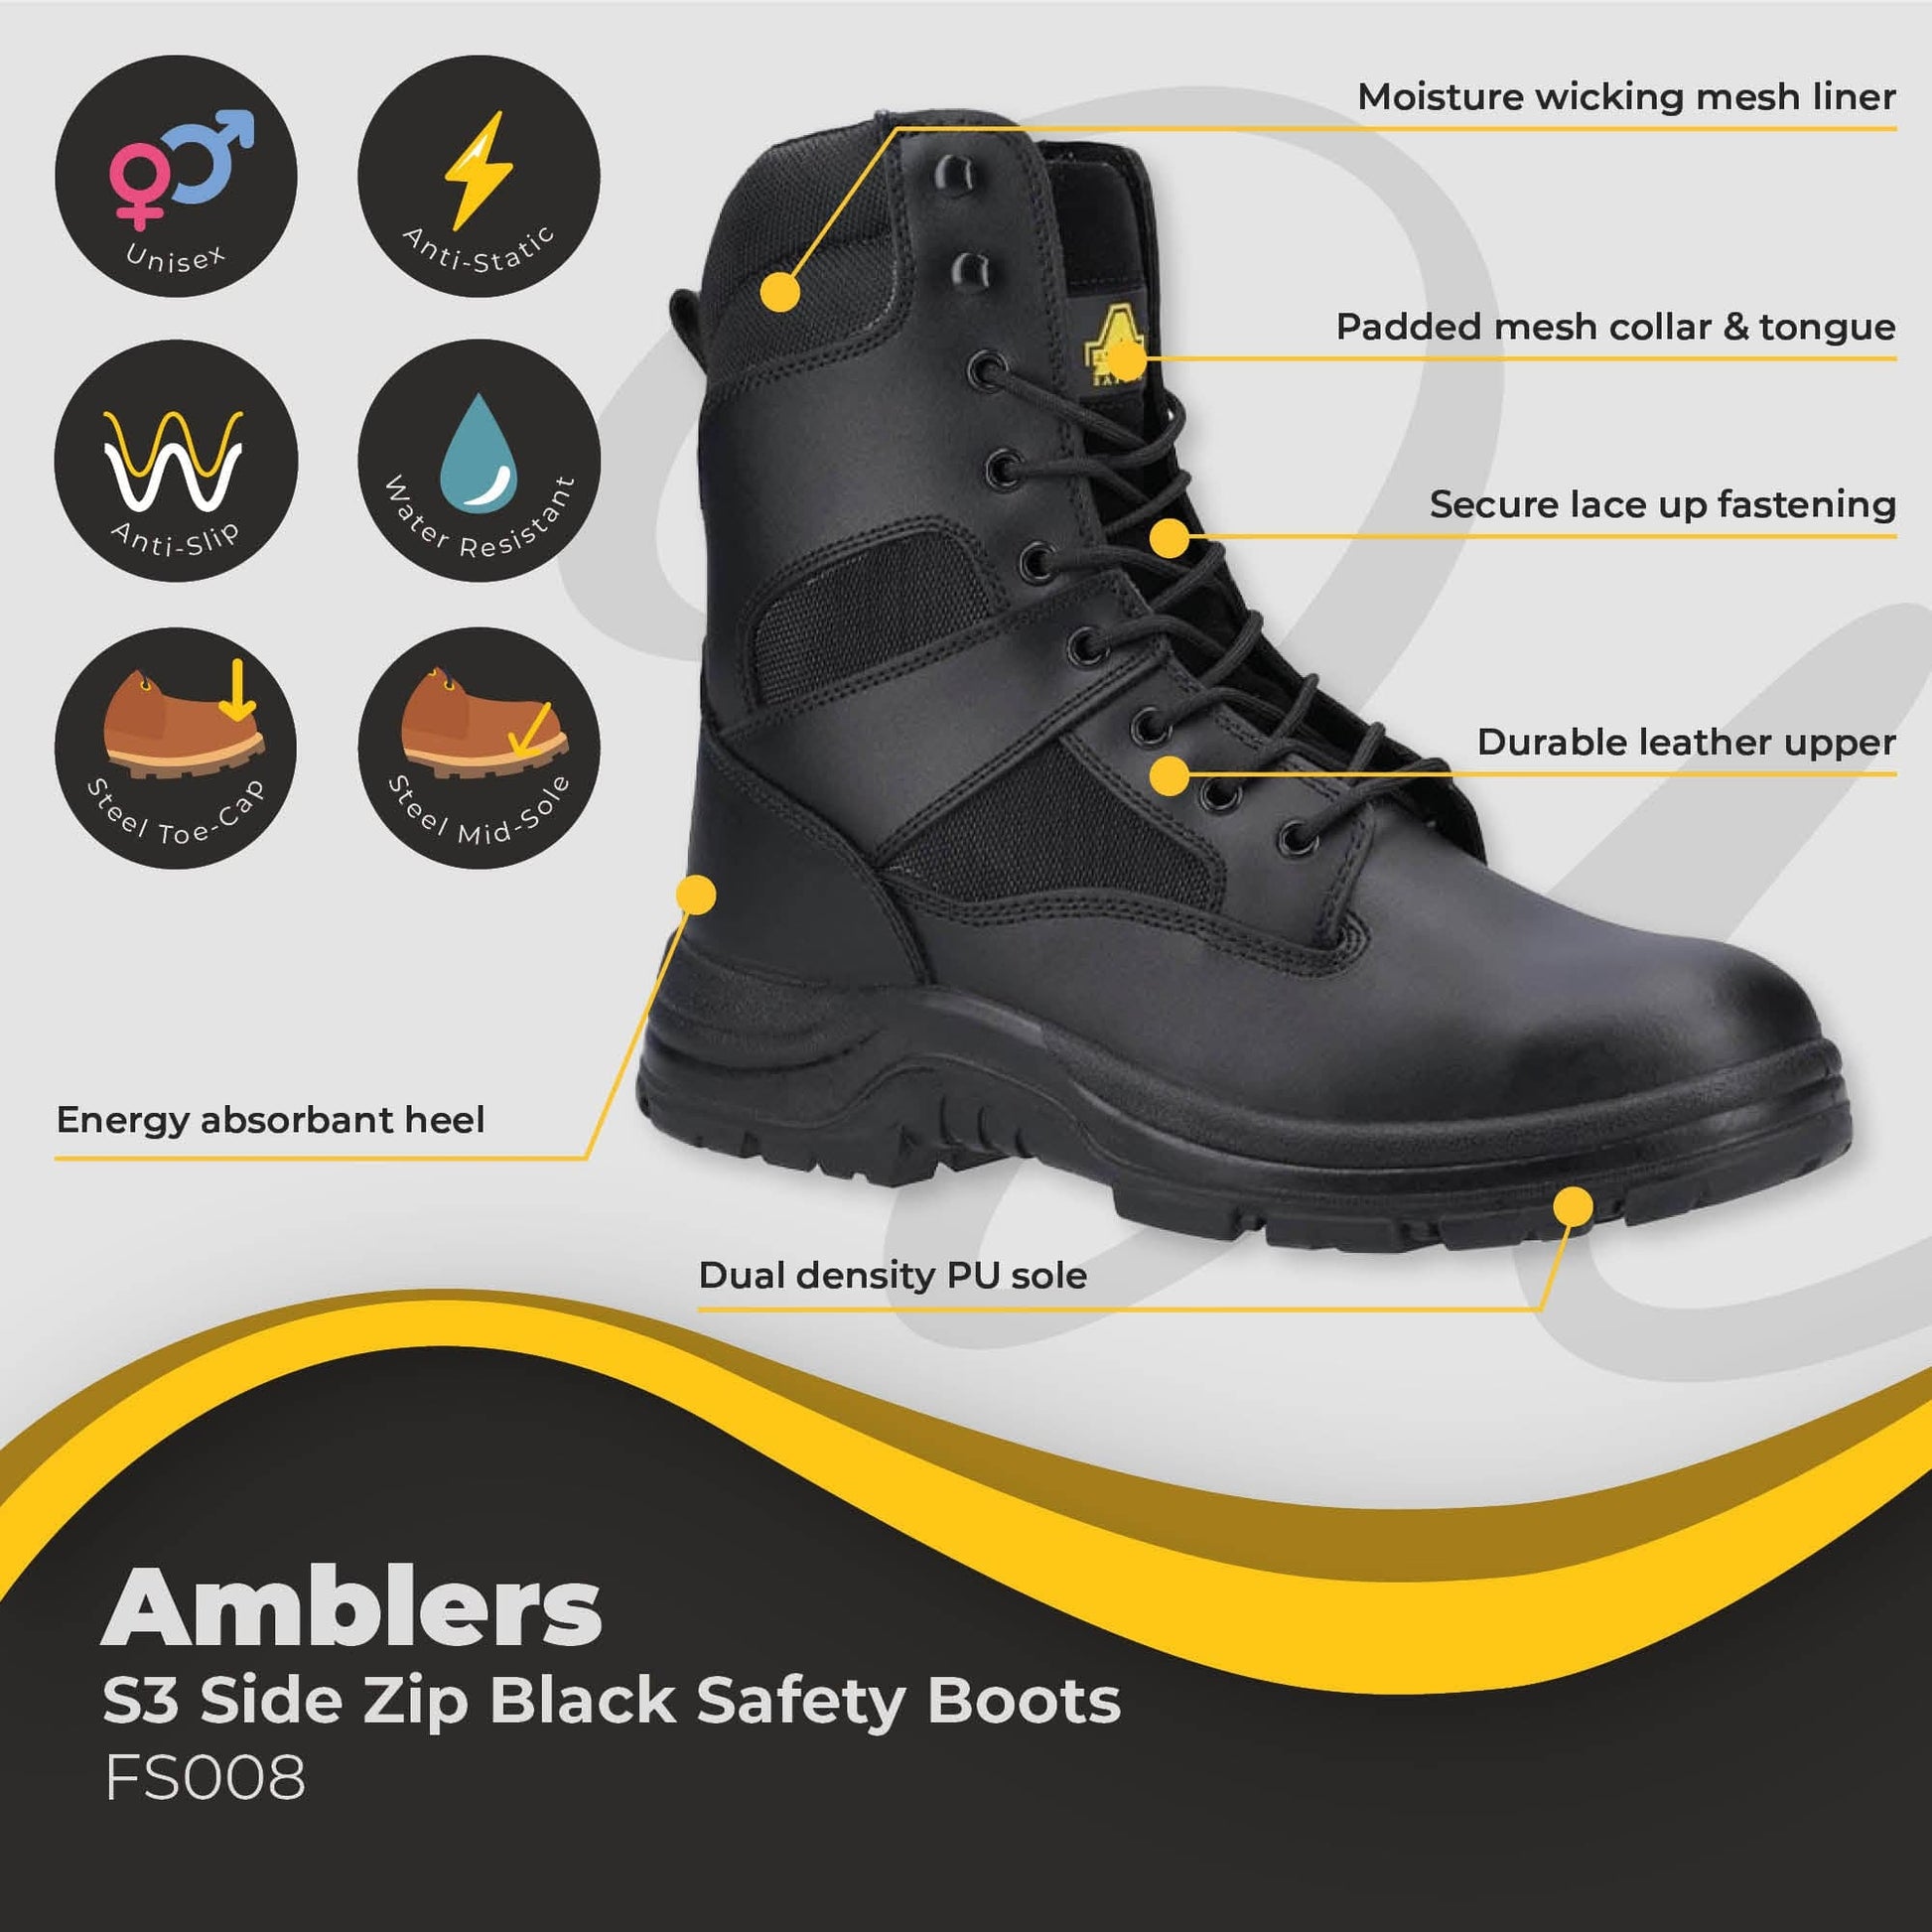 amblers side zip black safety boots s3 fs008 dd33